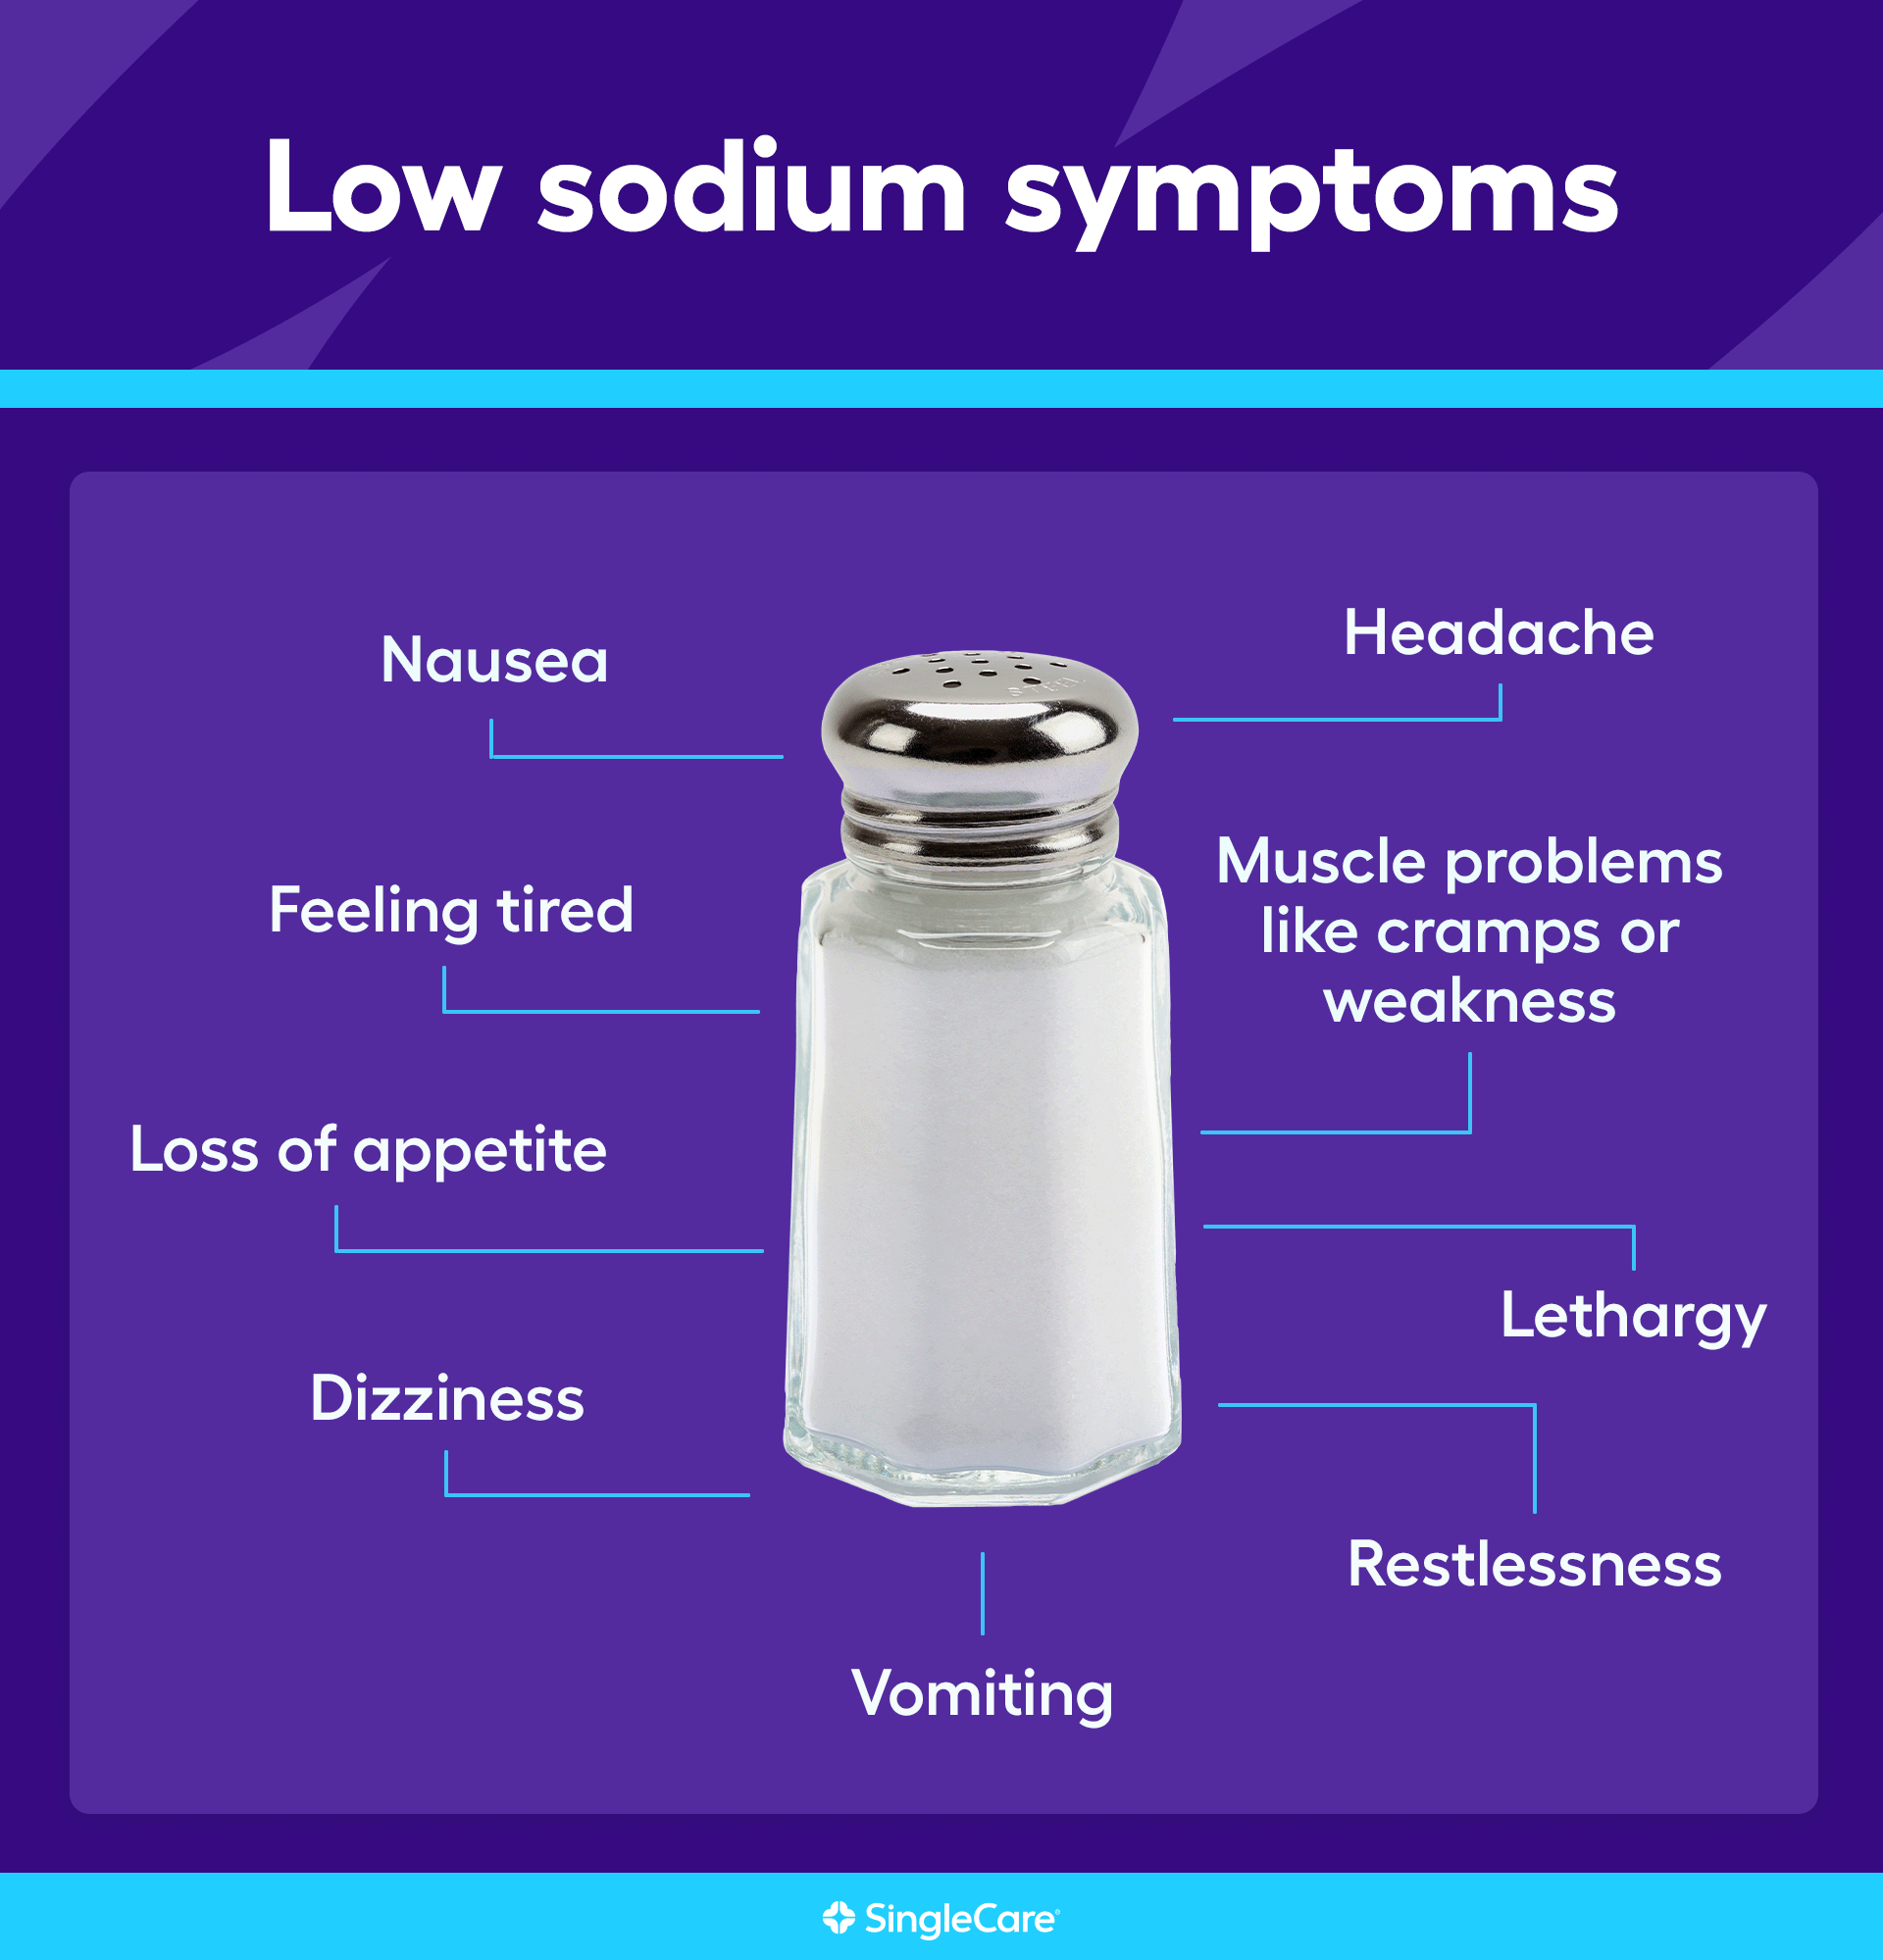 Low sodium symptoms